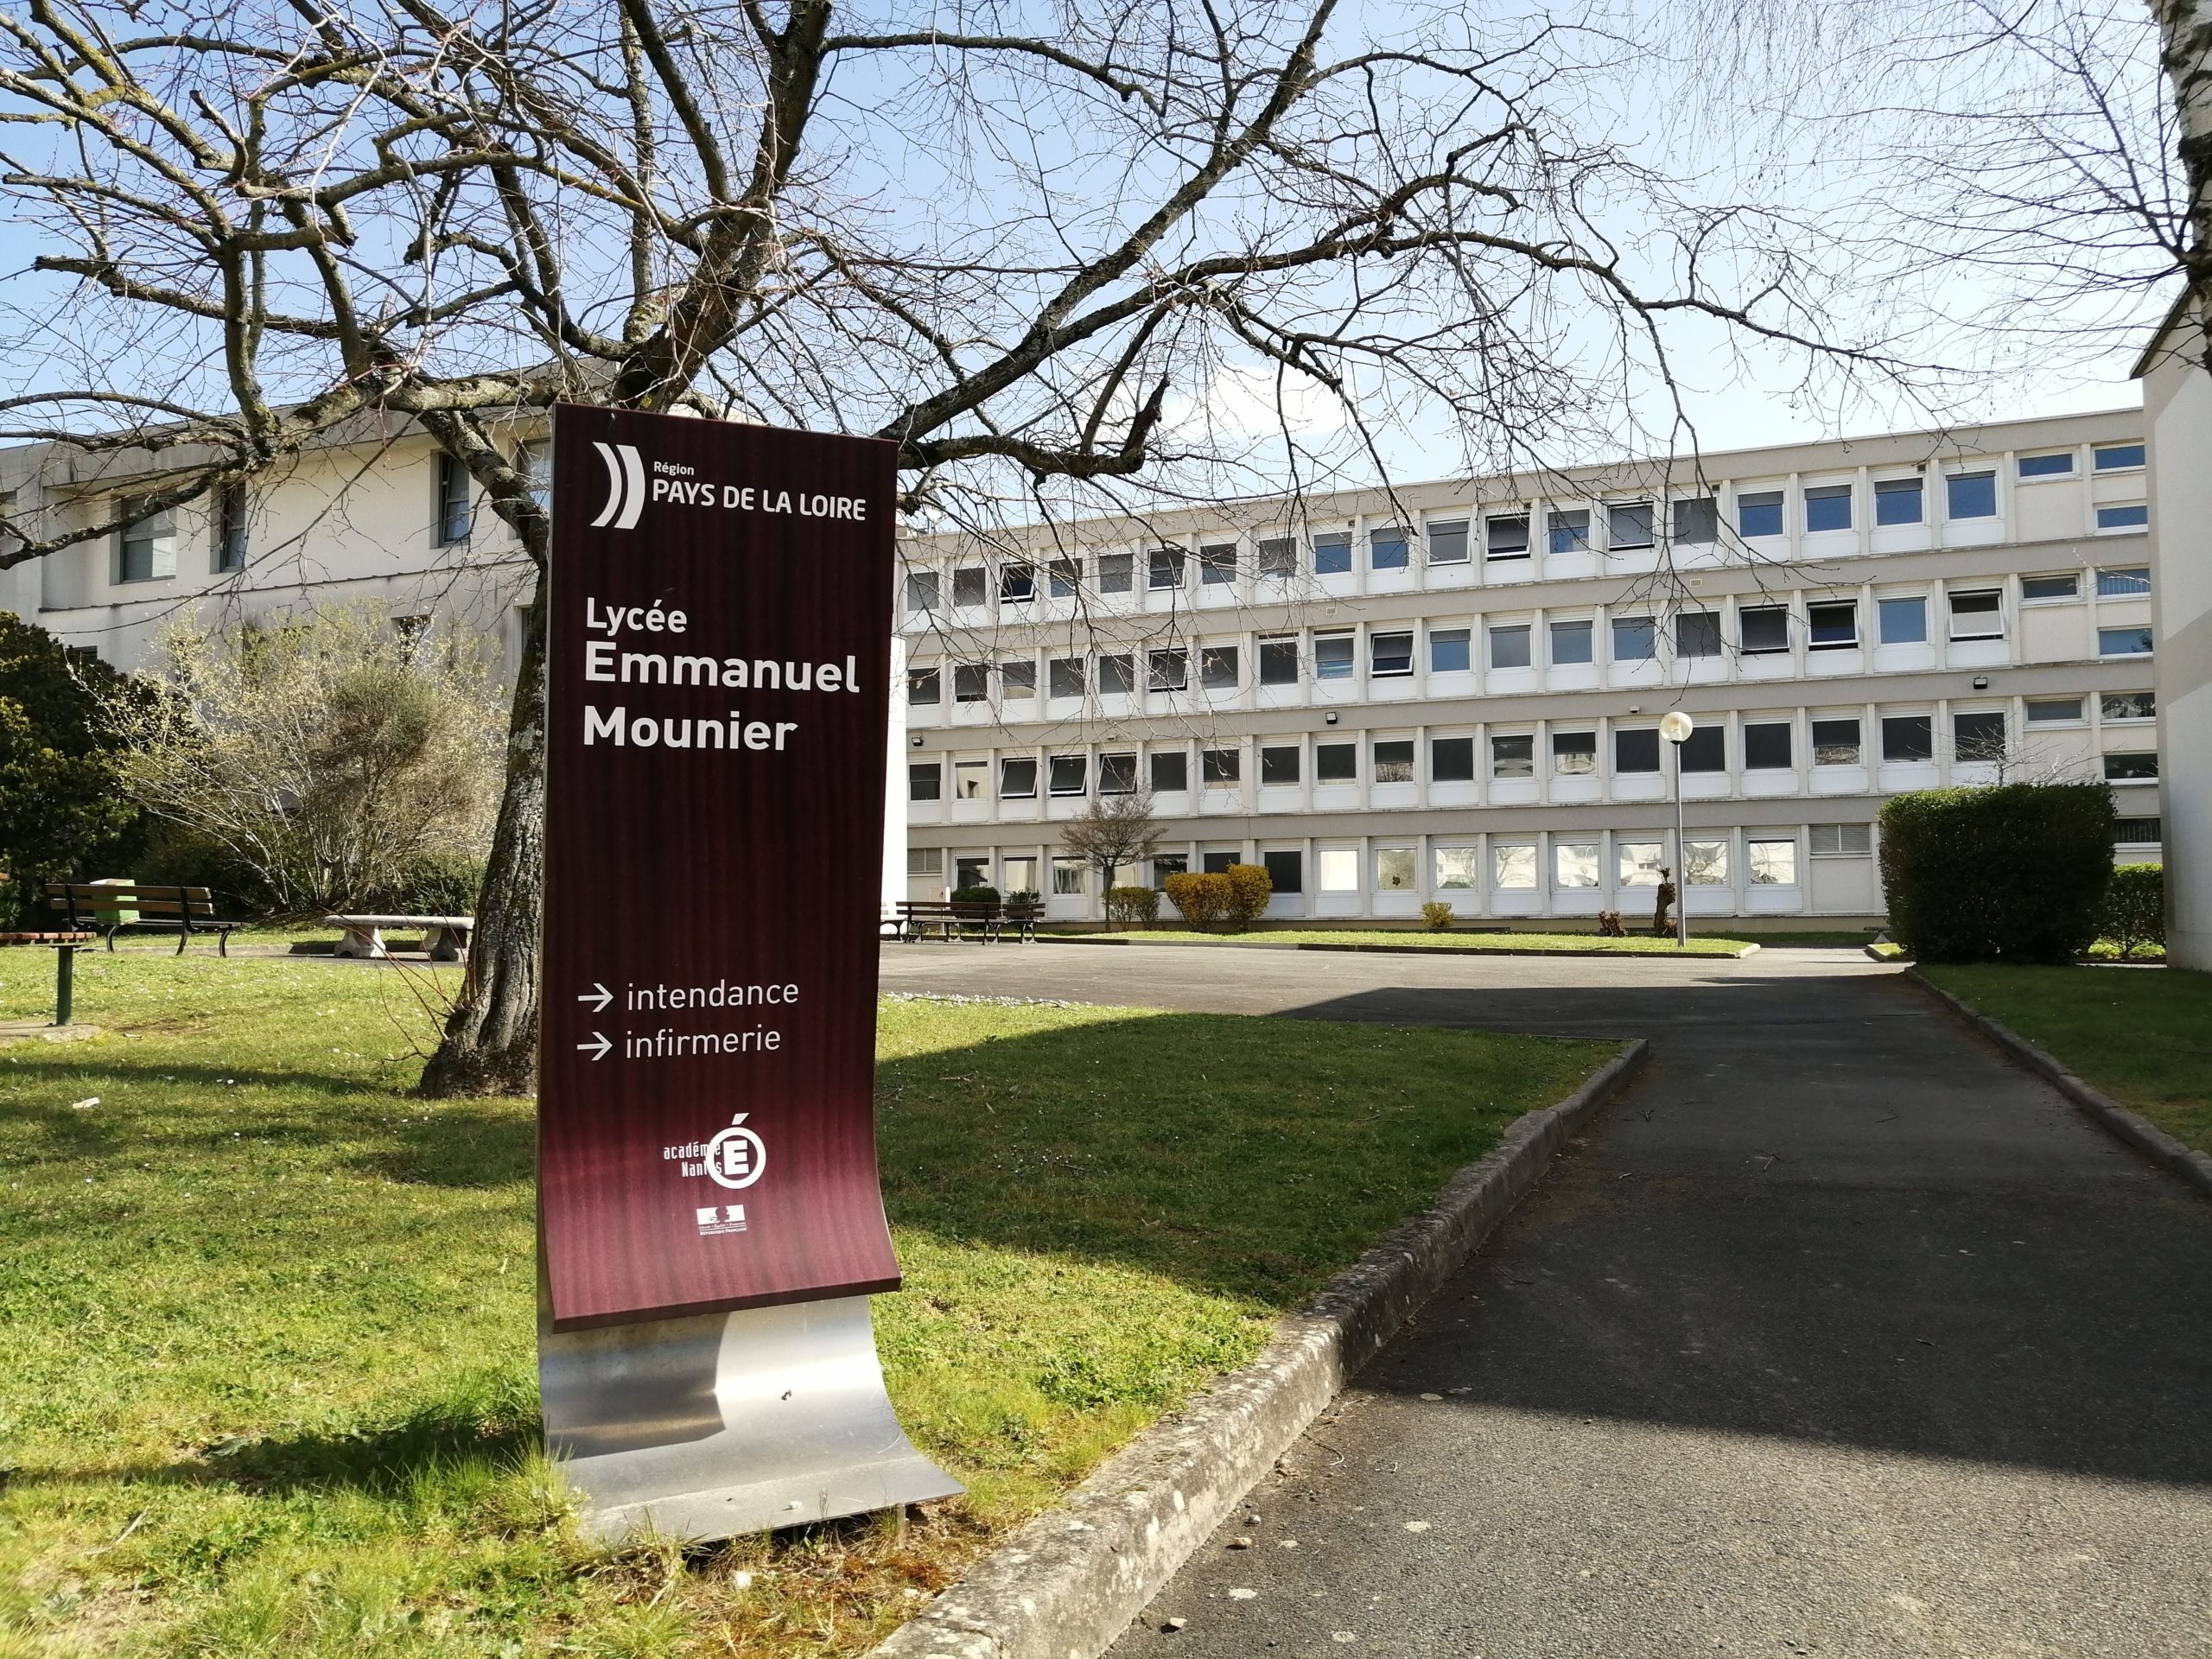 Lycée Emmanuel Mounier, Angers, France